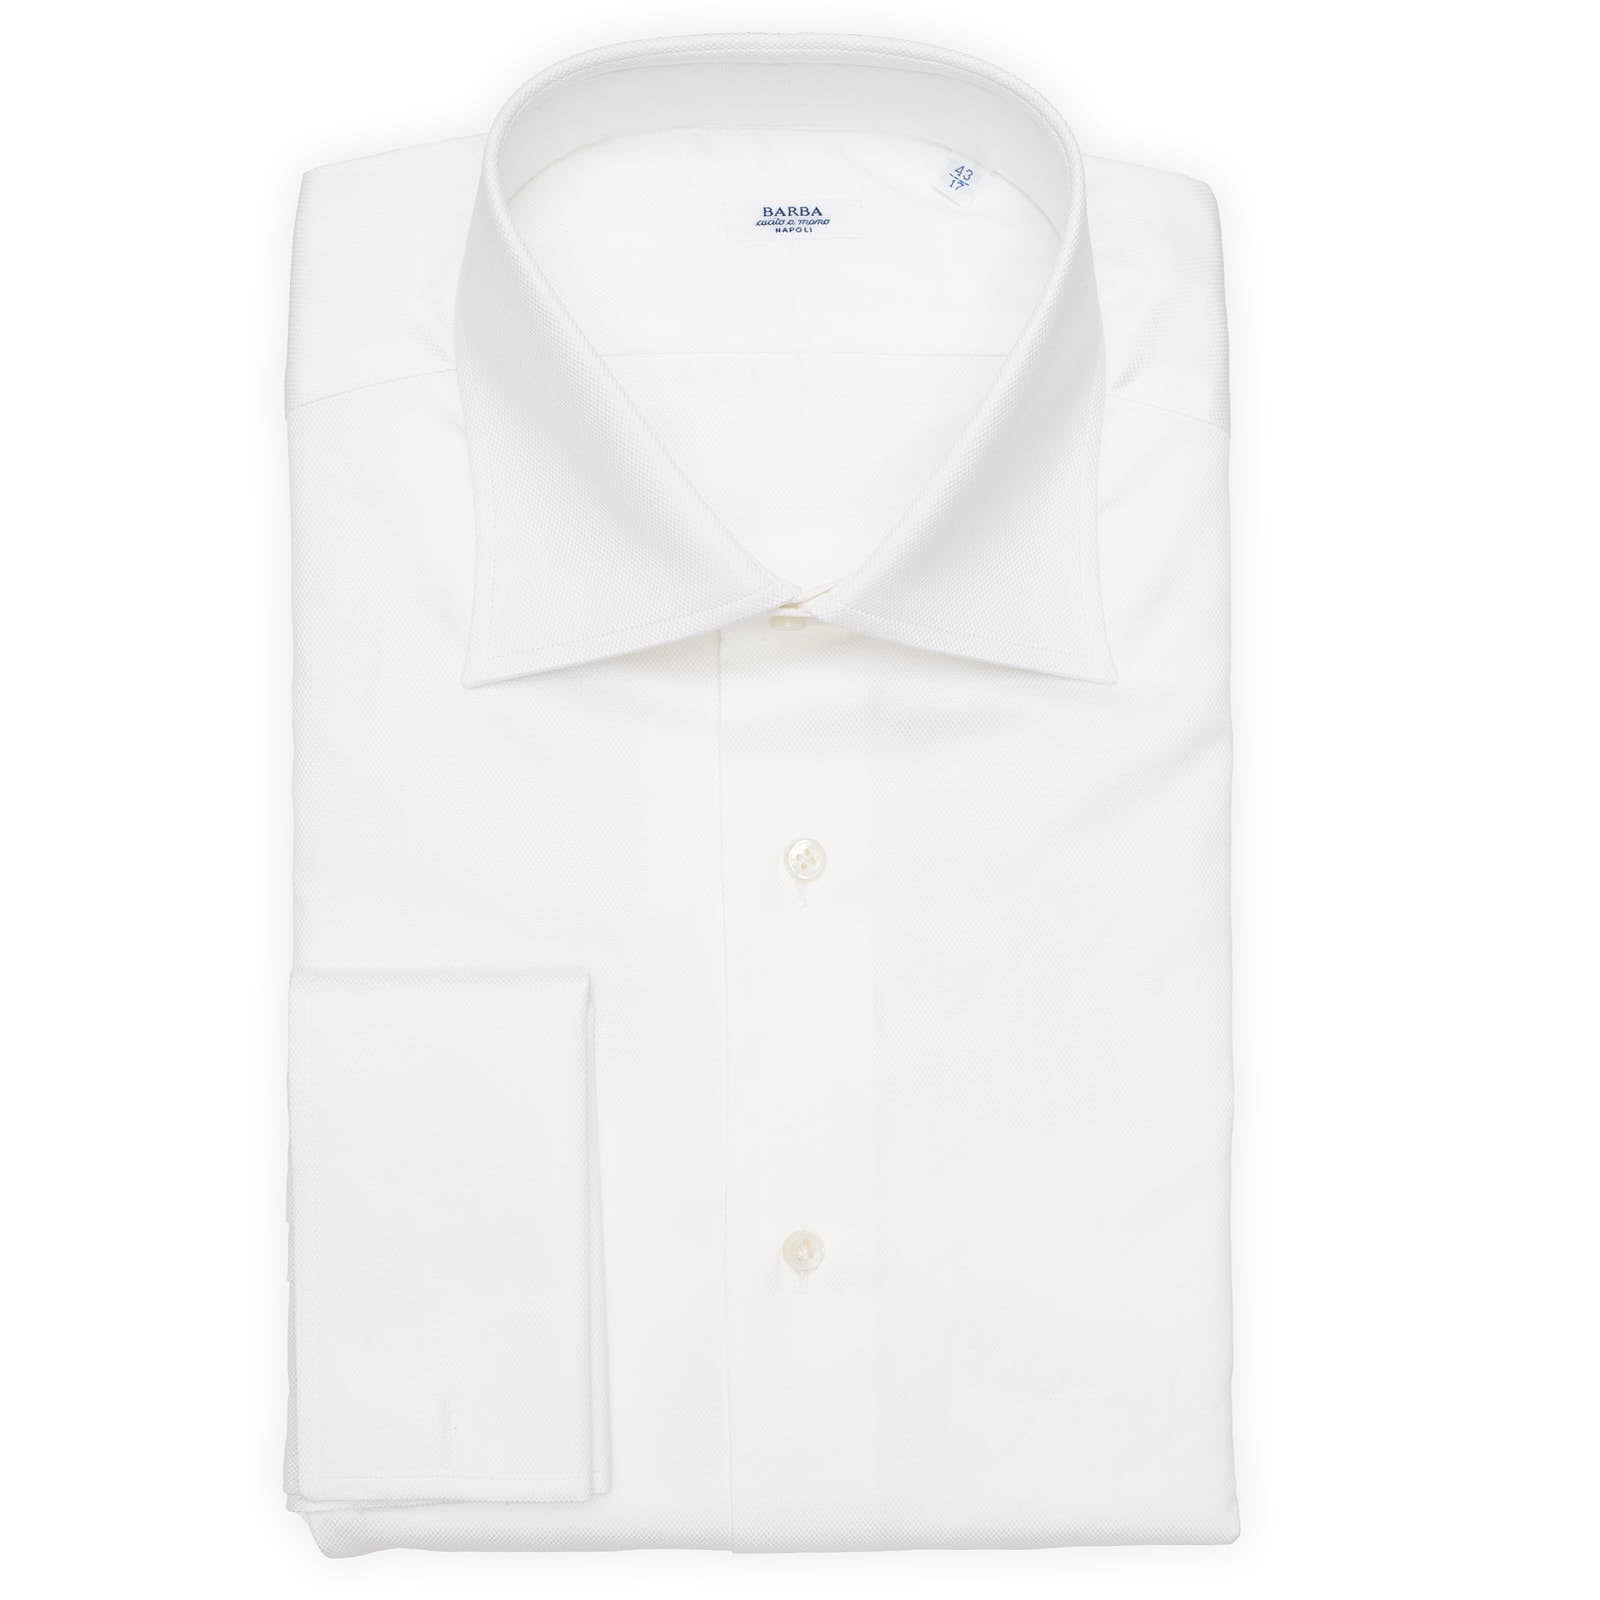 BARBA Napoli Handmade White Oxford Cotton French Cuff Dress Shirt EU 43 NEW US 17